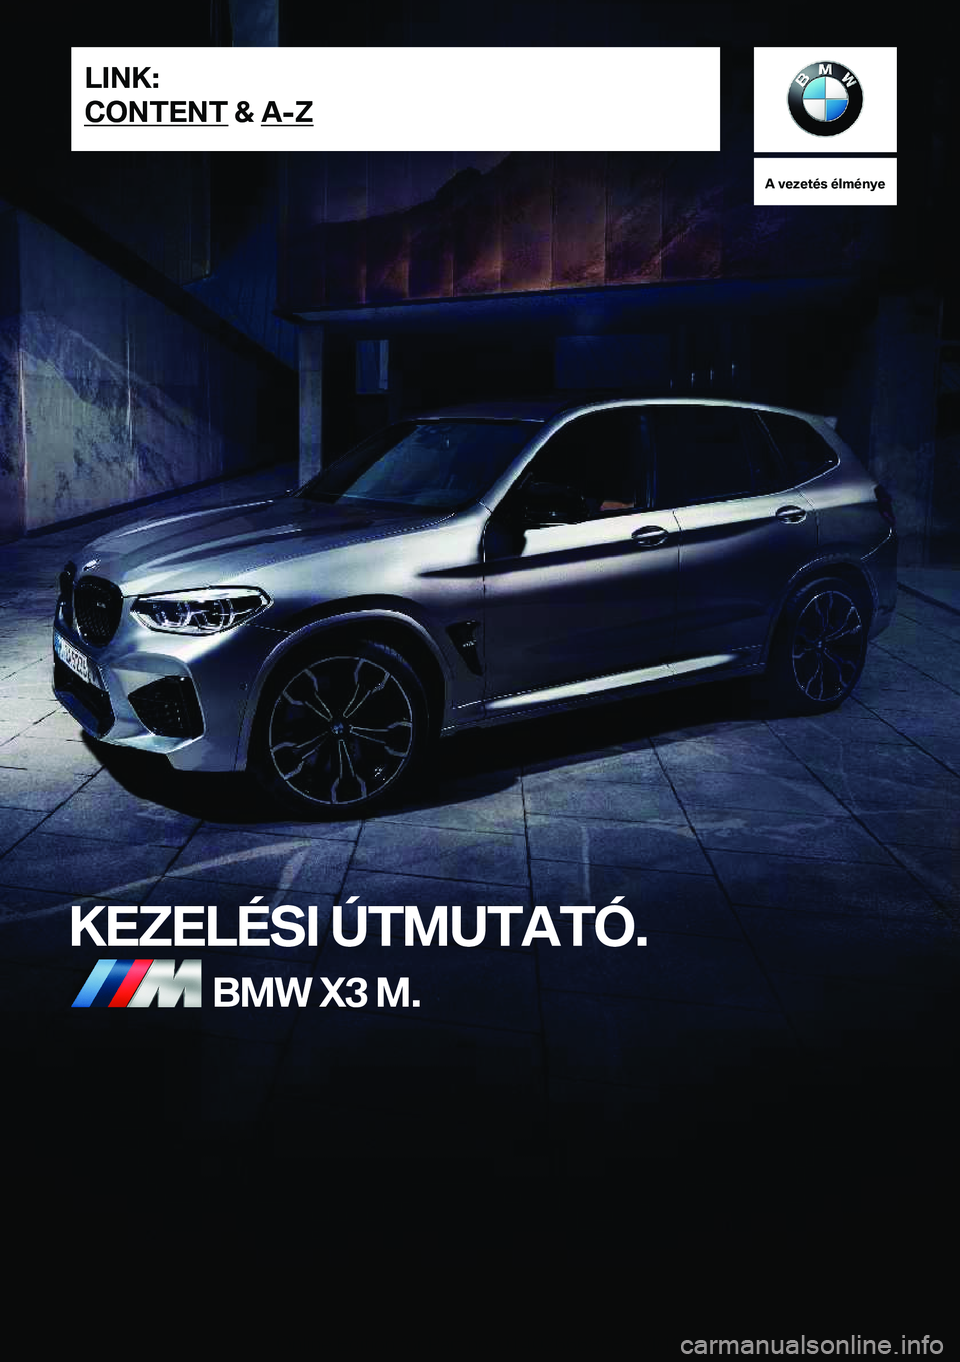 BMW X3 M 2020  Kezelési útmutató (in Hungarian) �A��v�e�z�e�t�